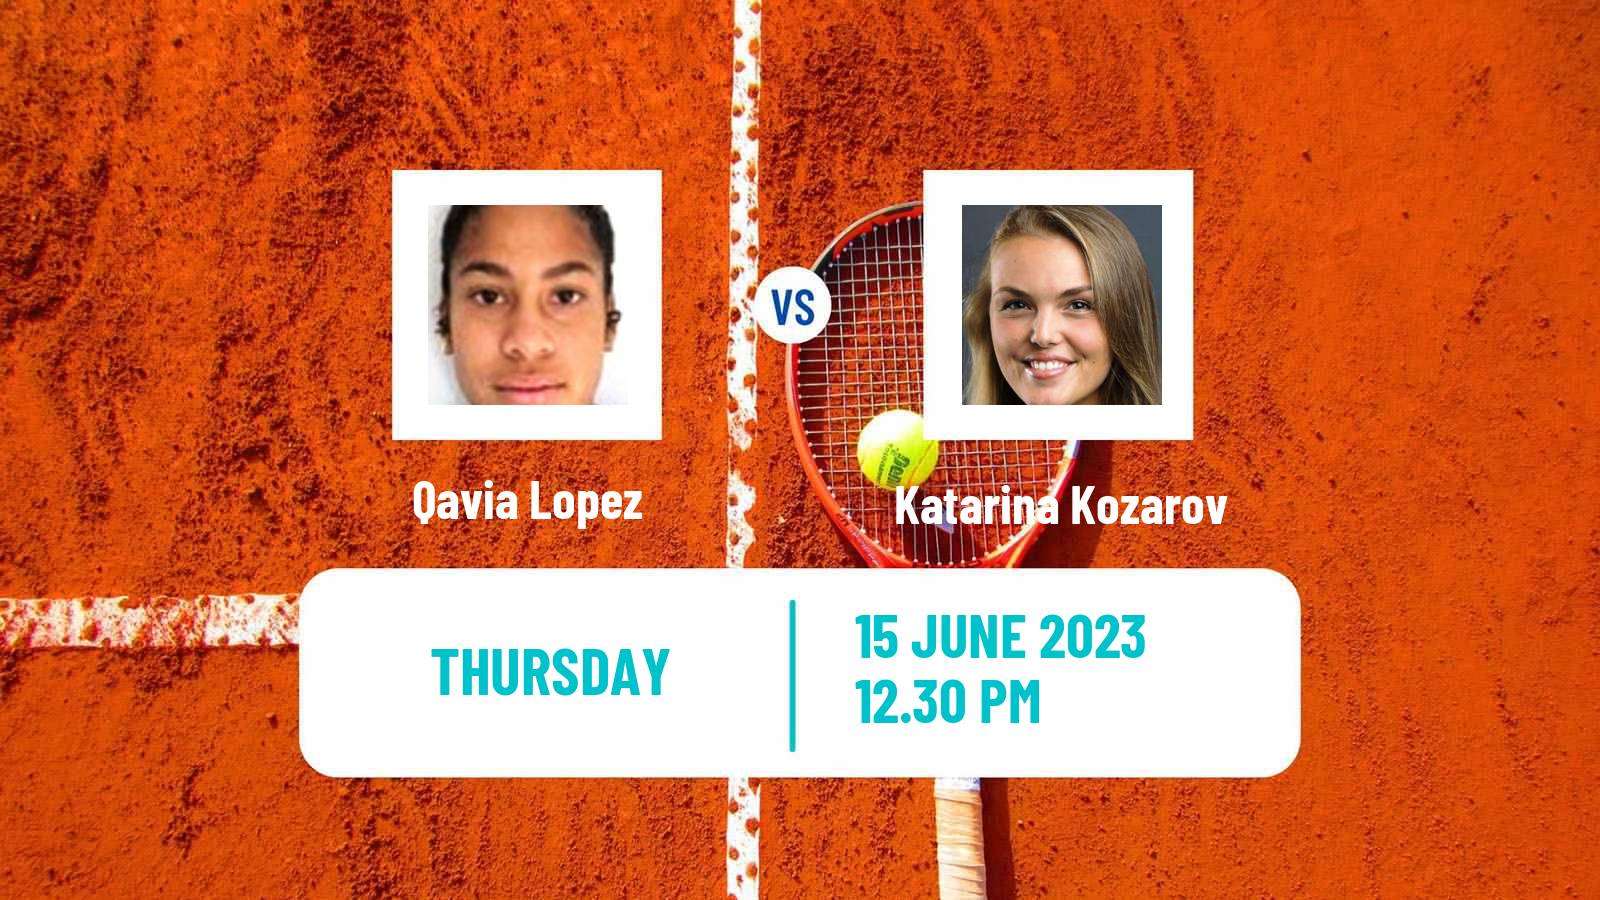 Tennis ITF W25 Colorado Springs Women Qavia Lopez - Katarina Kozarov